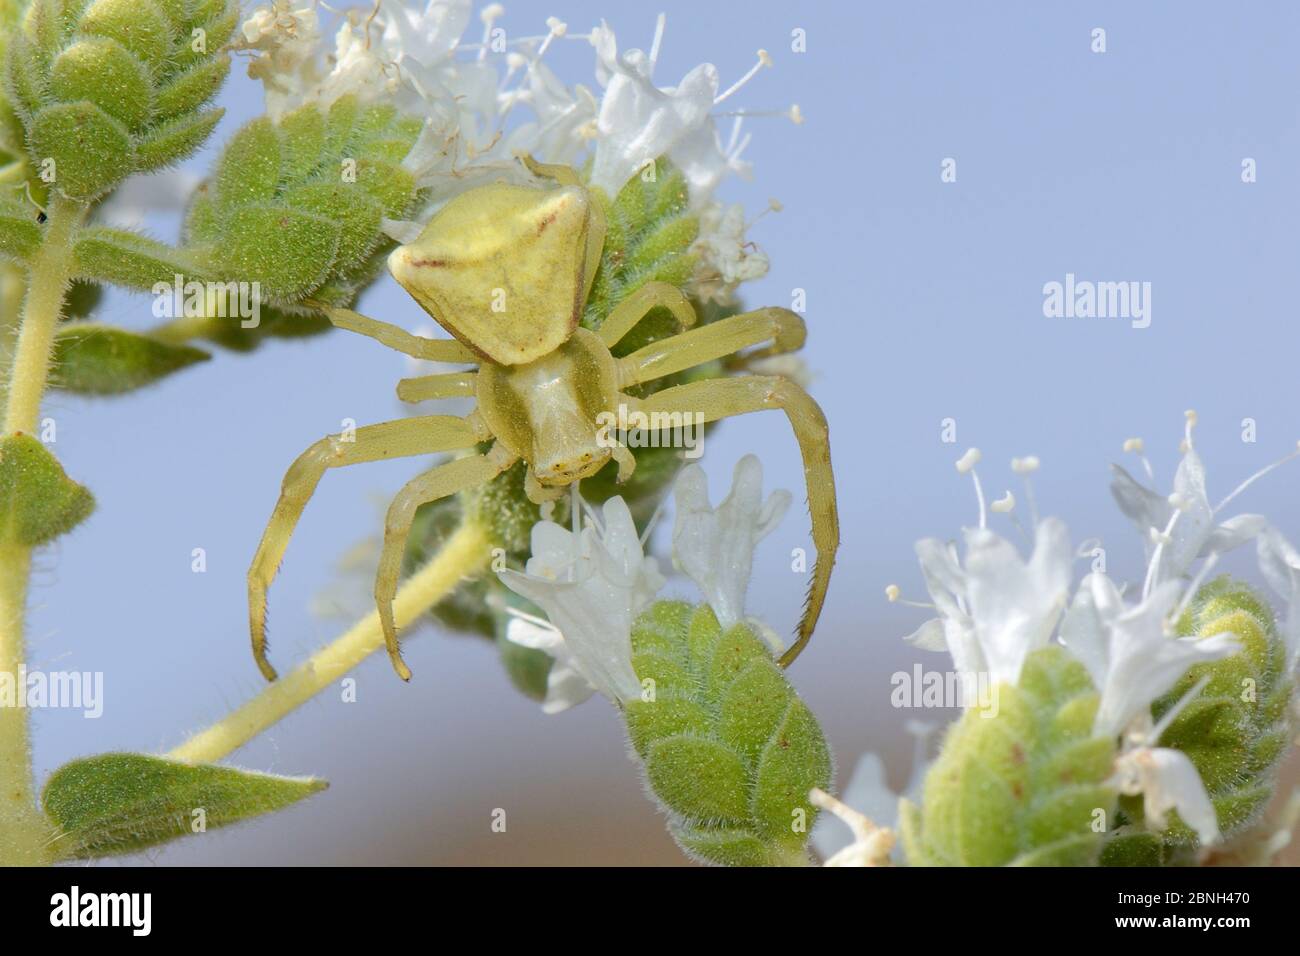 Heather crab spider (Thomisus onustus) waiting for insect prey on Cretan oregano flowerhead (Origanum onites), Lesbos/ Lesvos, Greece, May. Stock Photo